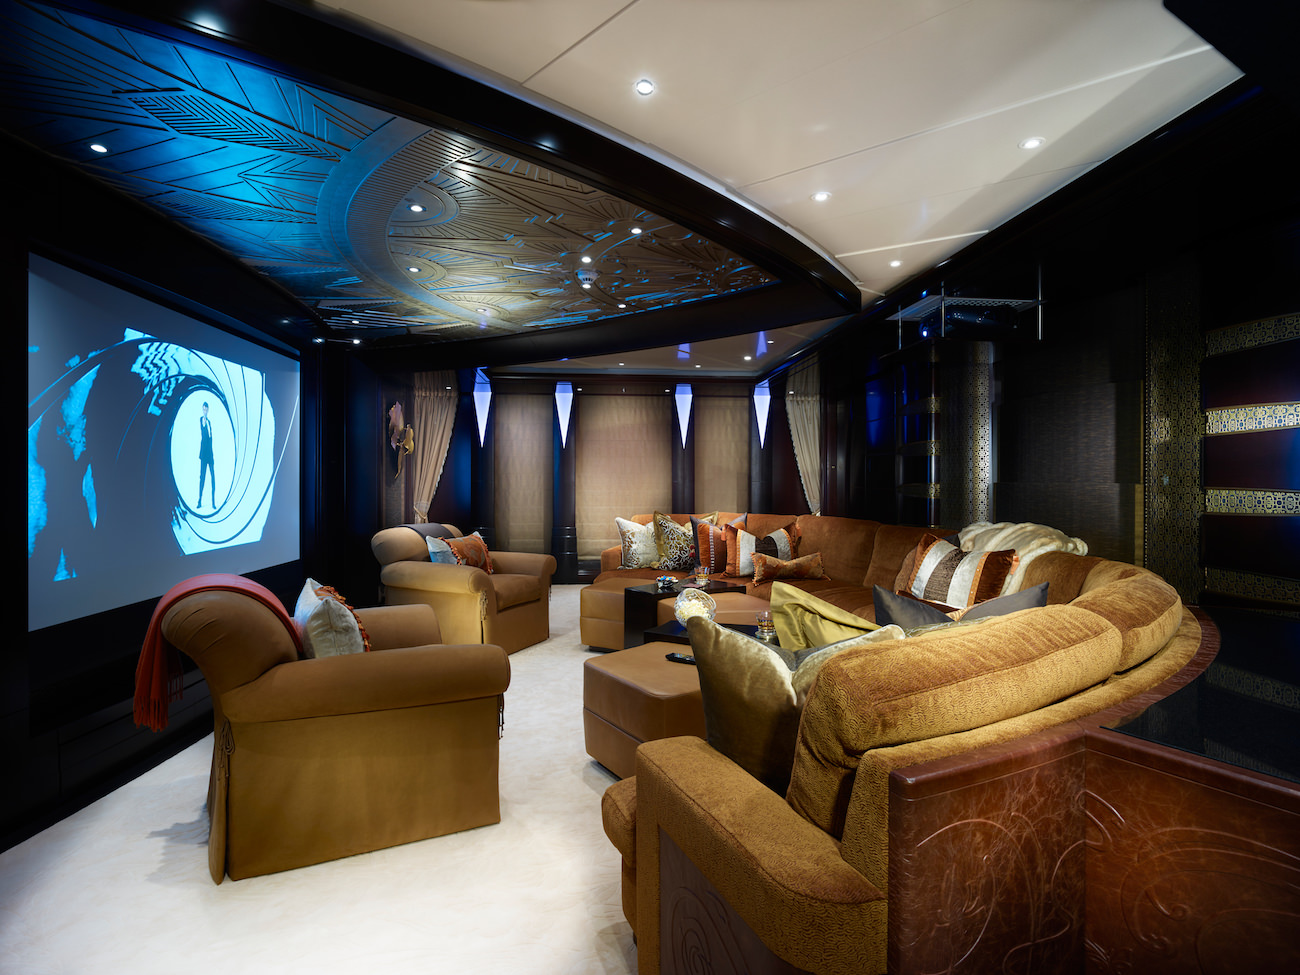 kismet yacht interior photos